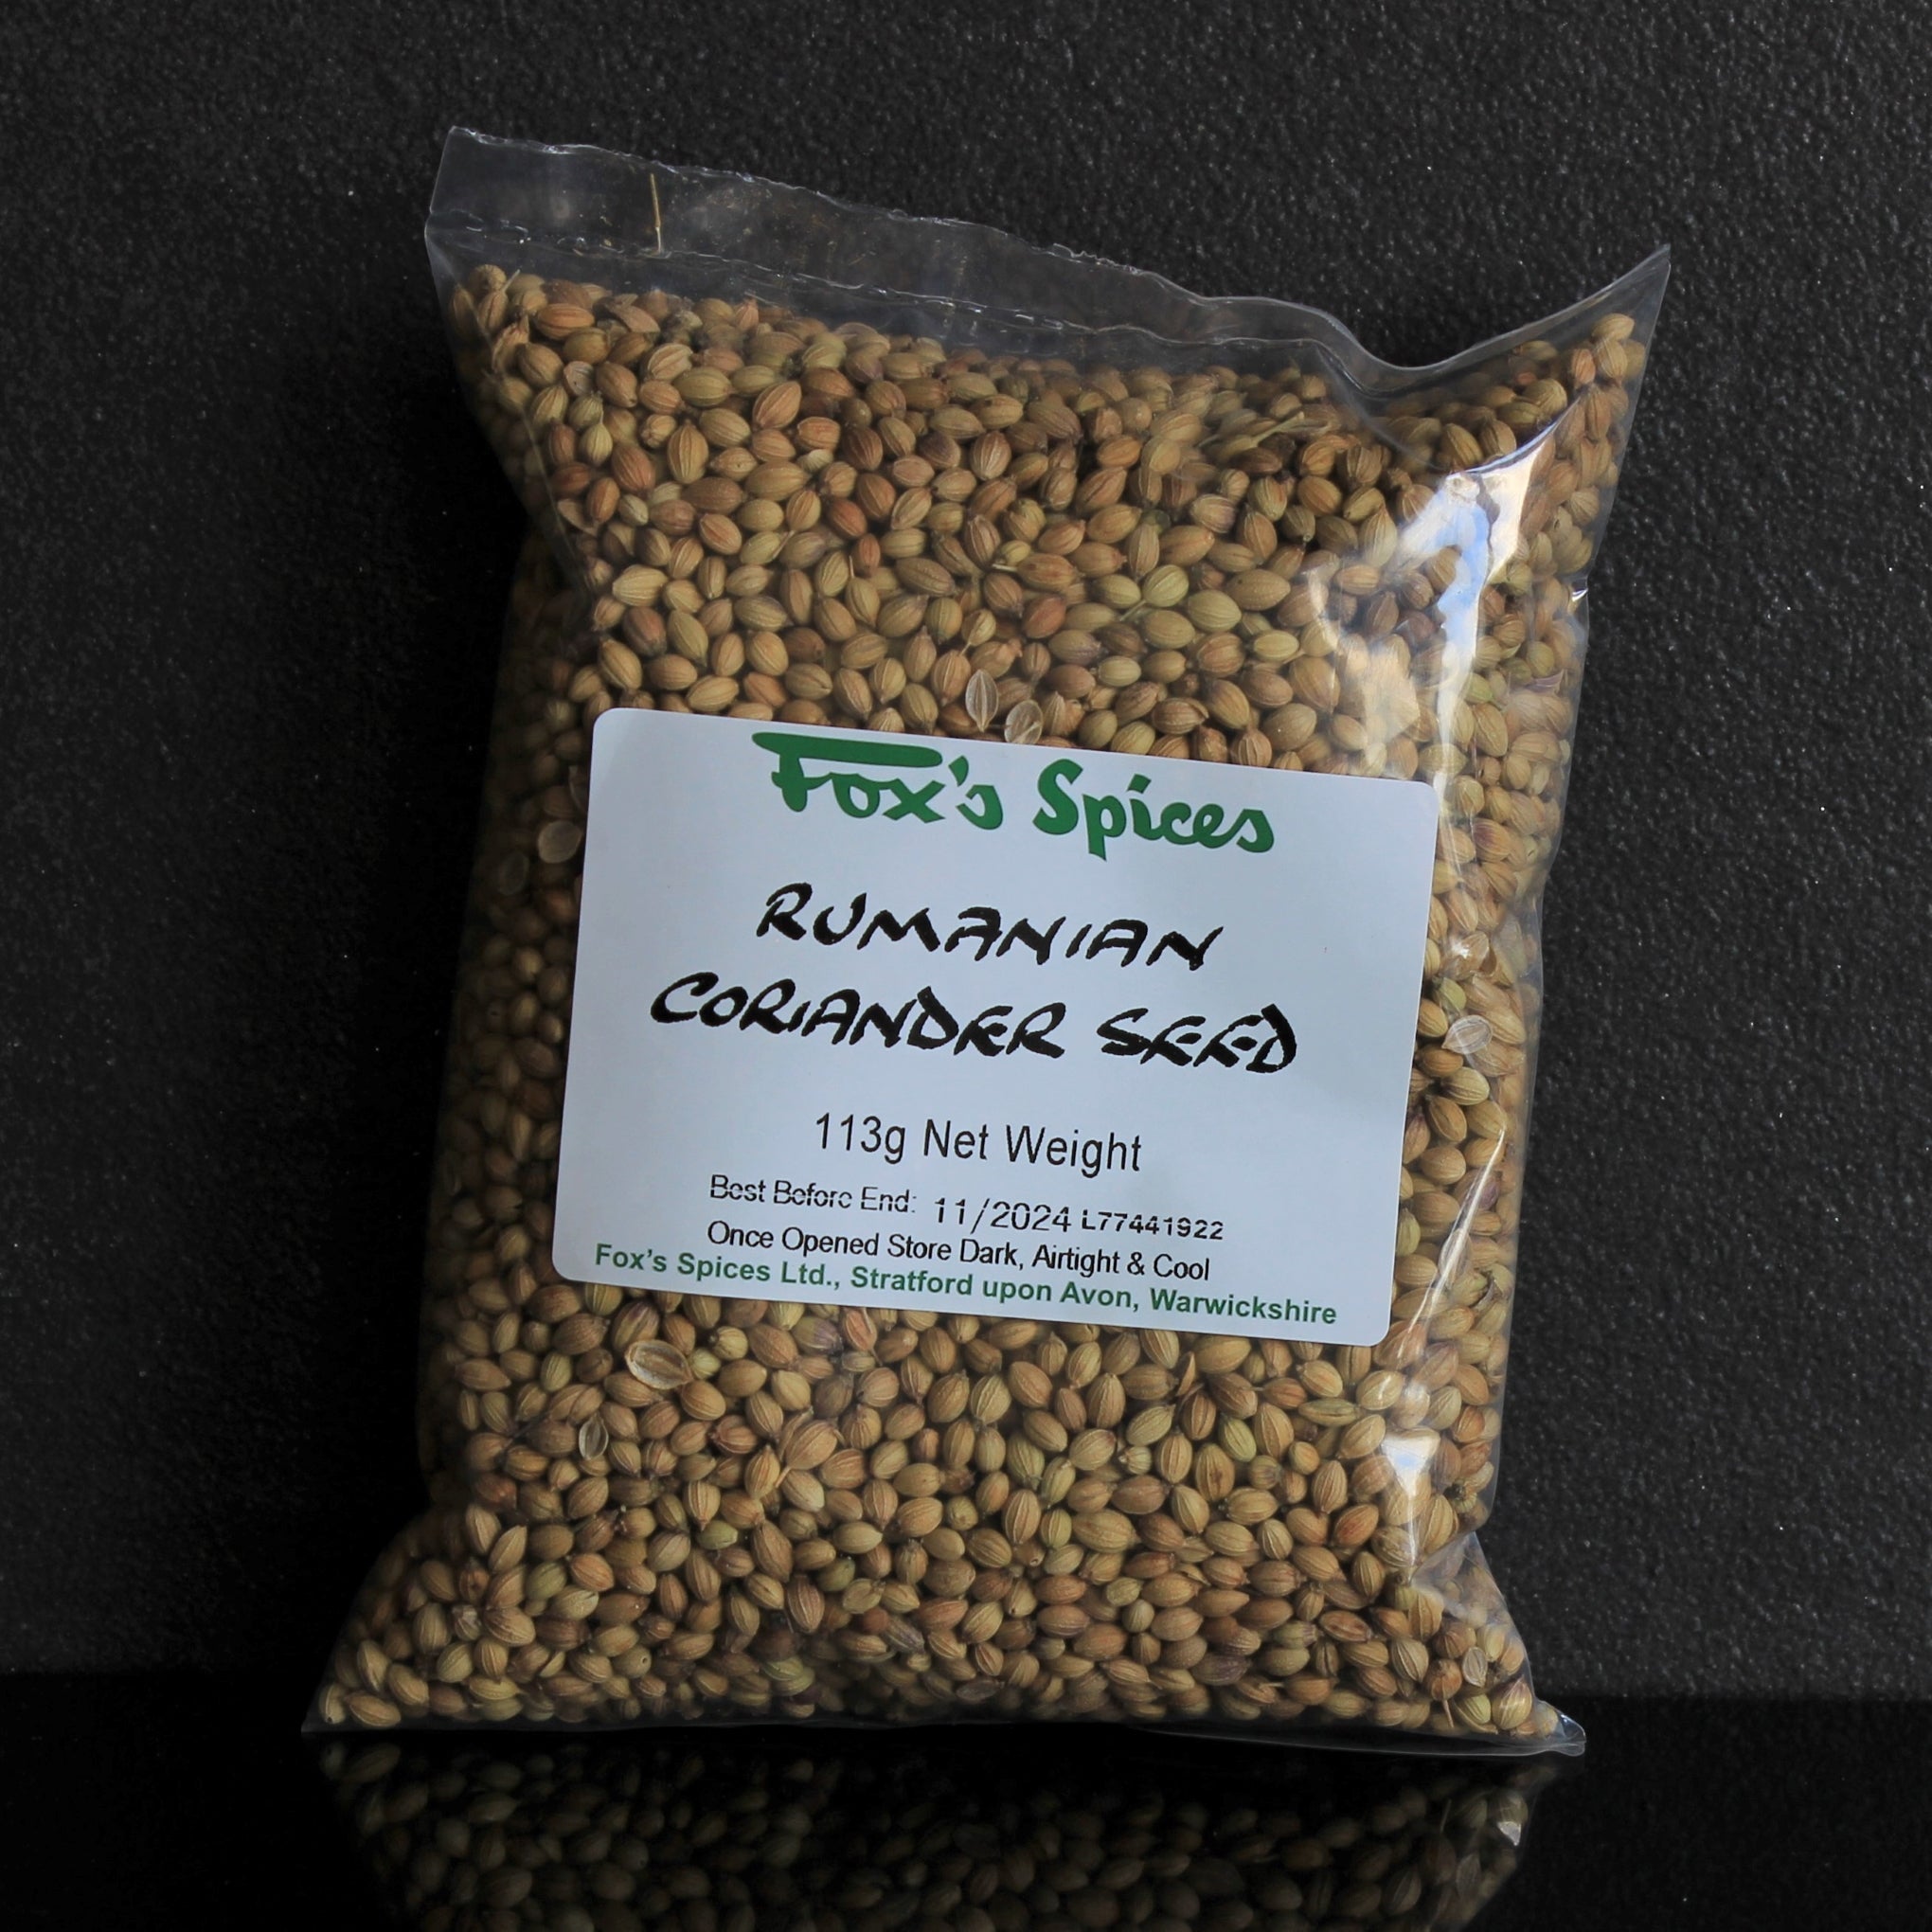 A 113g bag of Fox's Spices Rumanian coriander seeds.